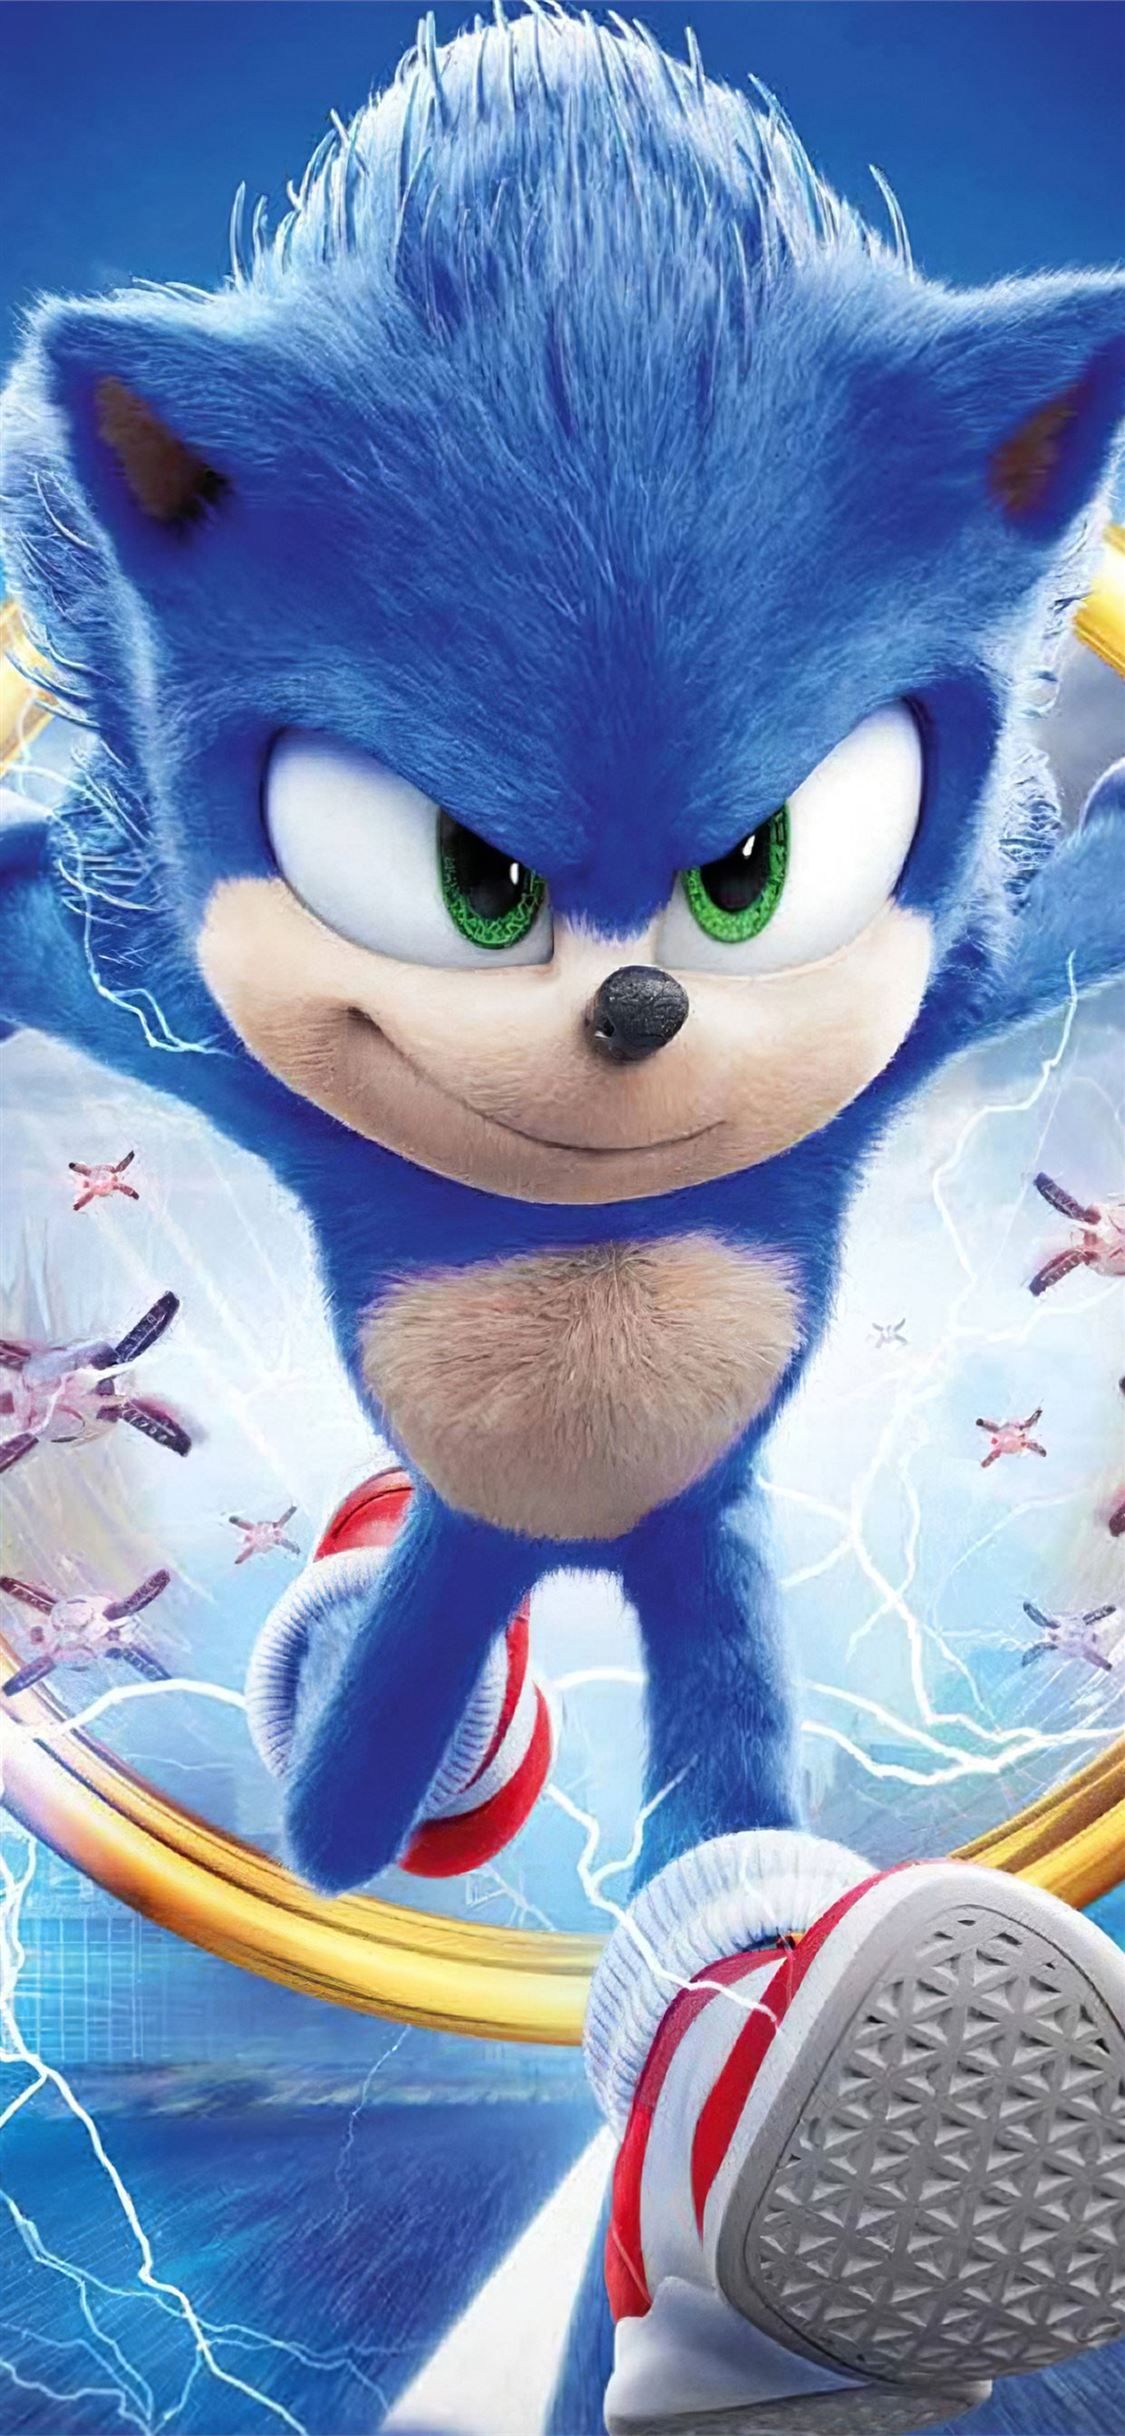 sonic the hedgehog movie new #SonicTheHedgehog #movies Movies #sonic #iPhone11Wallpaper. Hedgehog movie, Sonic, Sonic the hedgehog